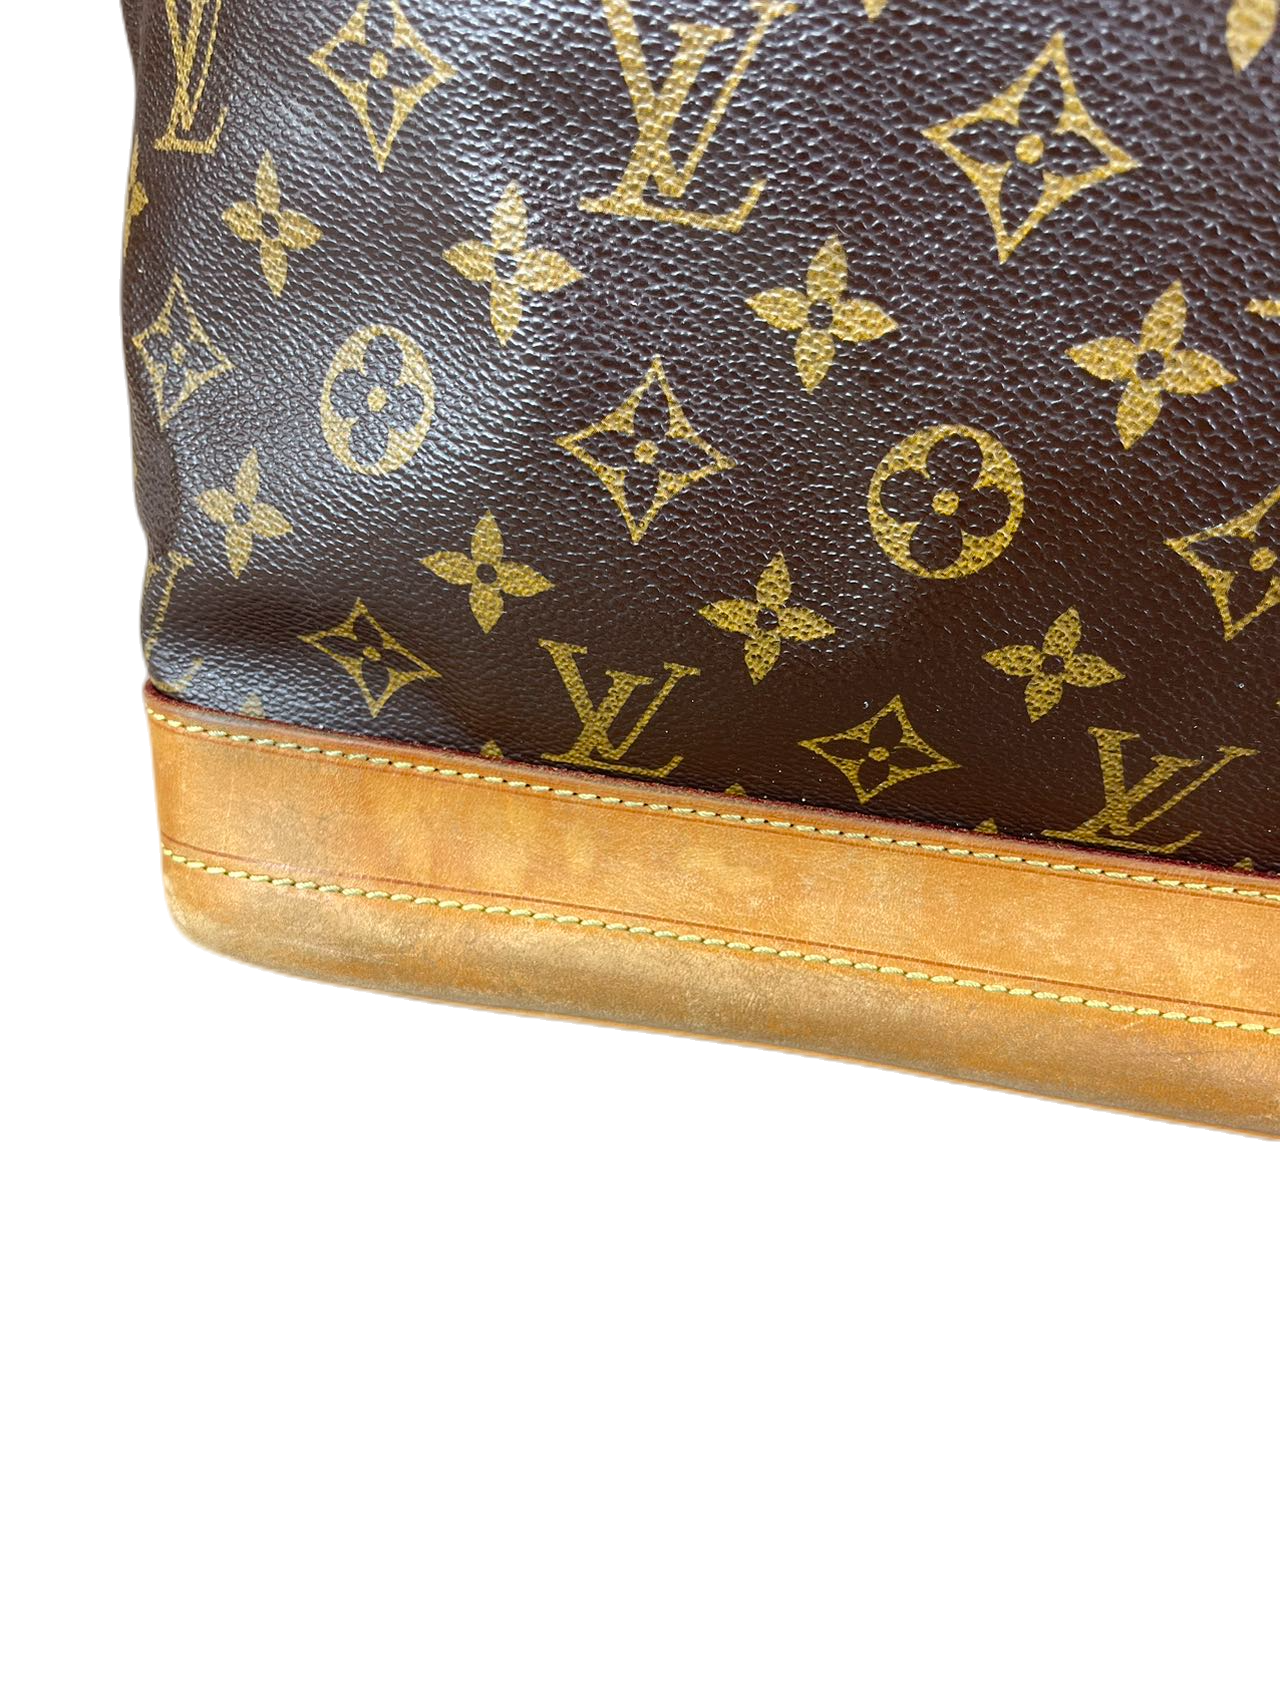 Preloved Louis Vuitton Monogram Canvas Neonoe Shoulder Bag